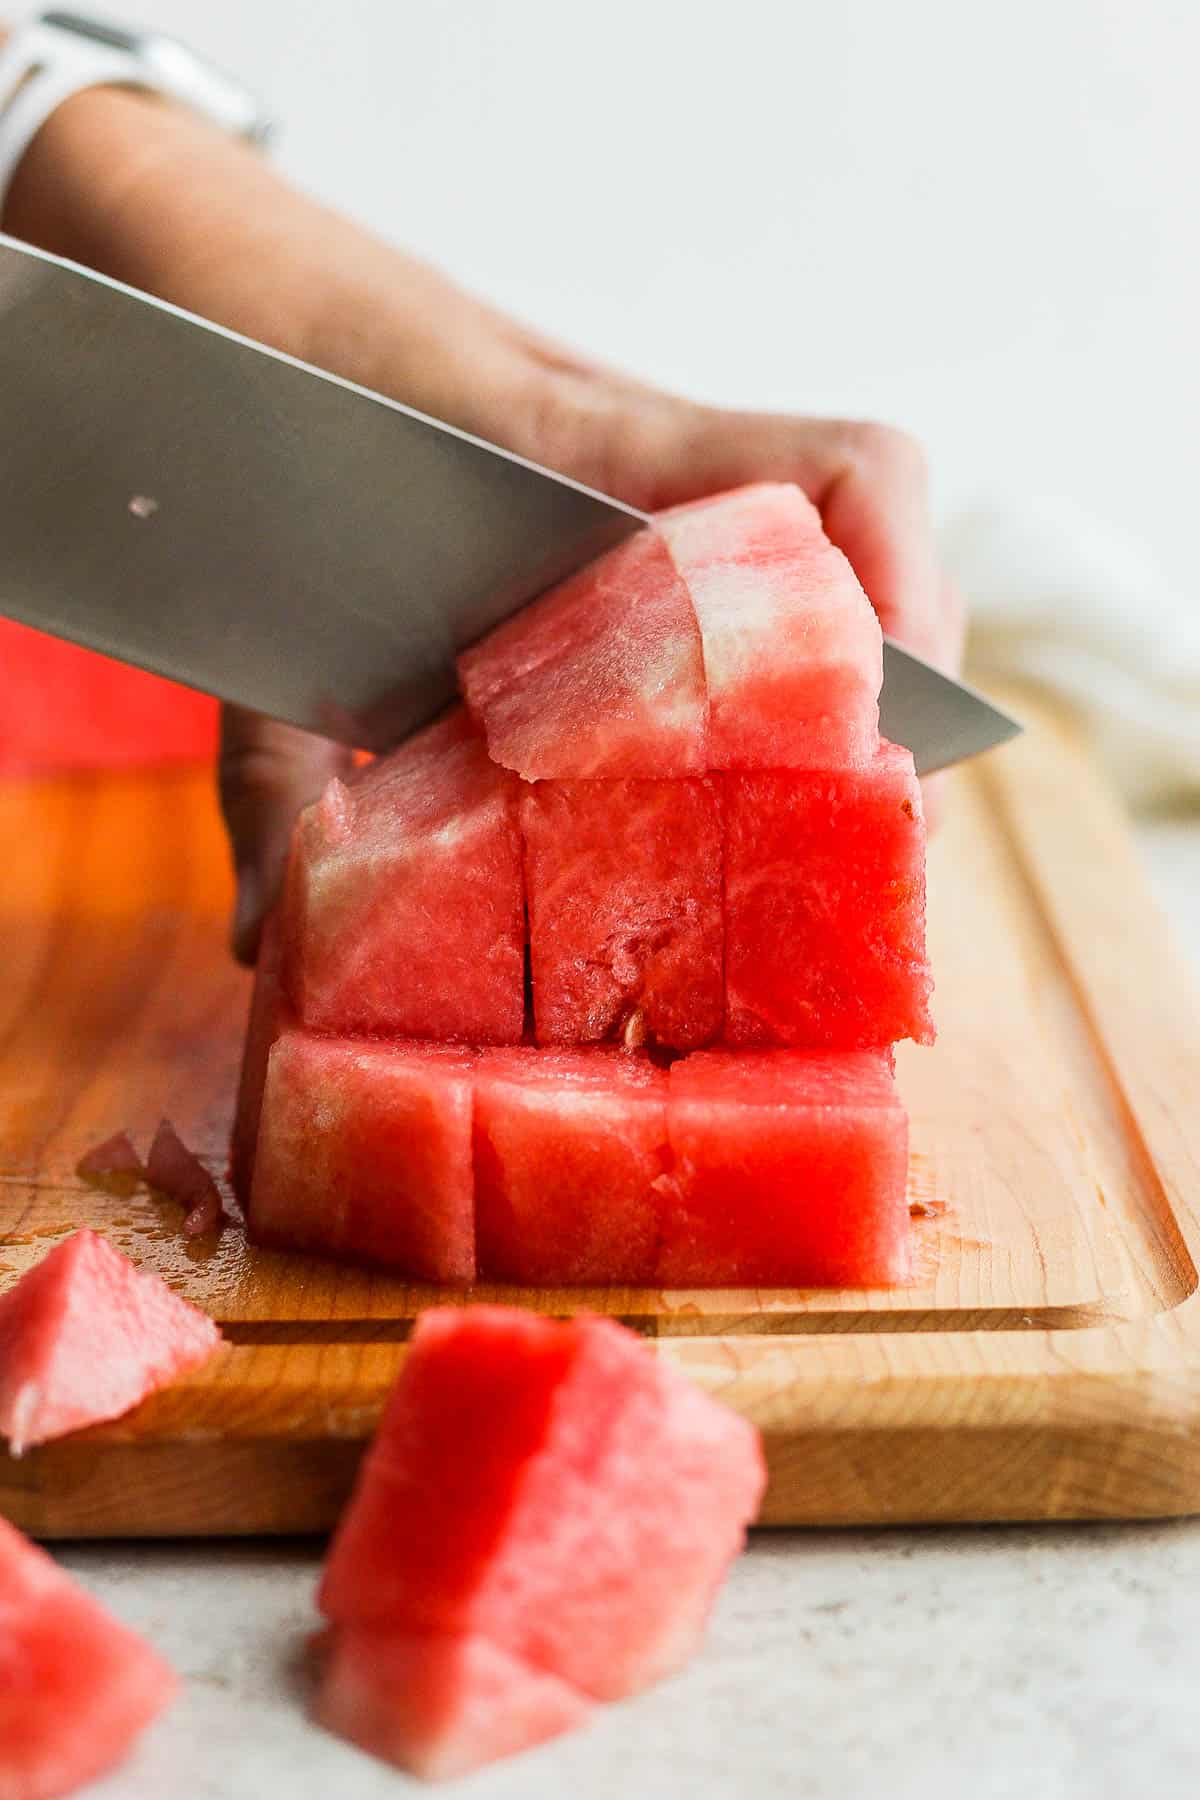 Watermelon sticks being cut into cubes.